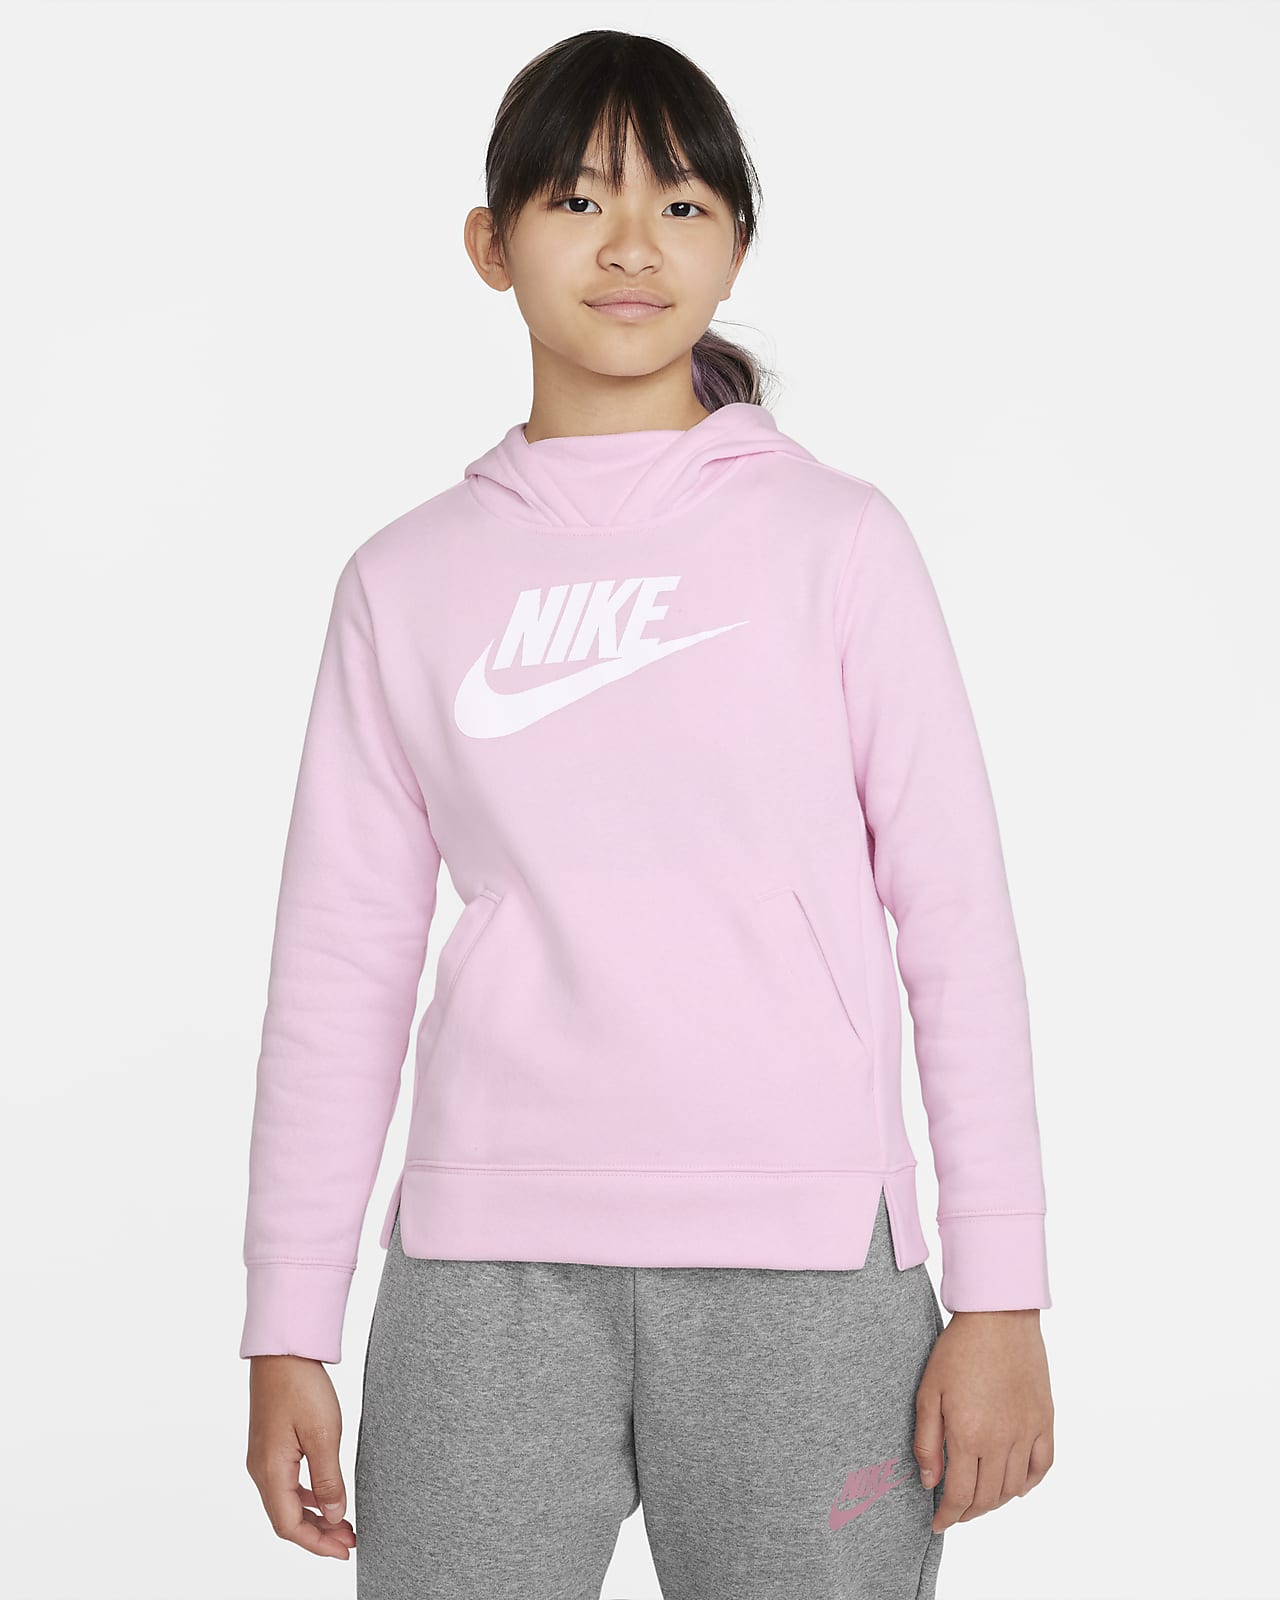 Galleta cobija Calumnia Nike Sportswear Girls' Pullover Hoodie. Nike.com